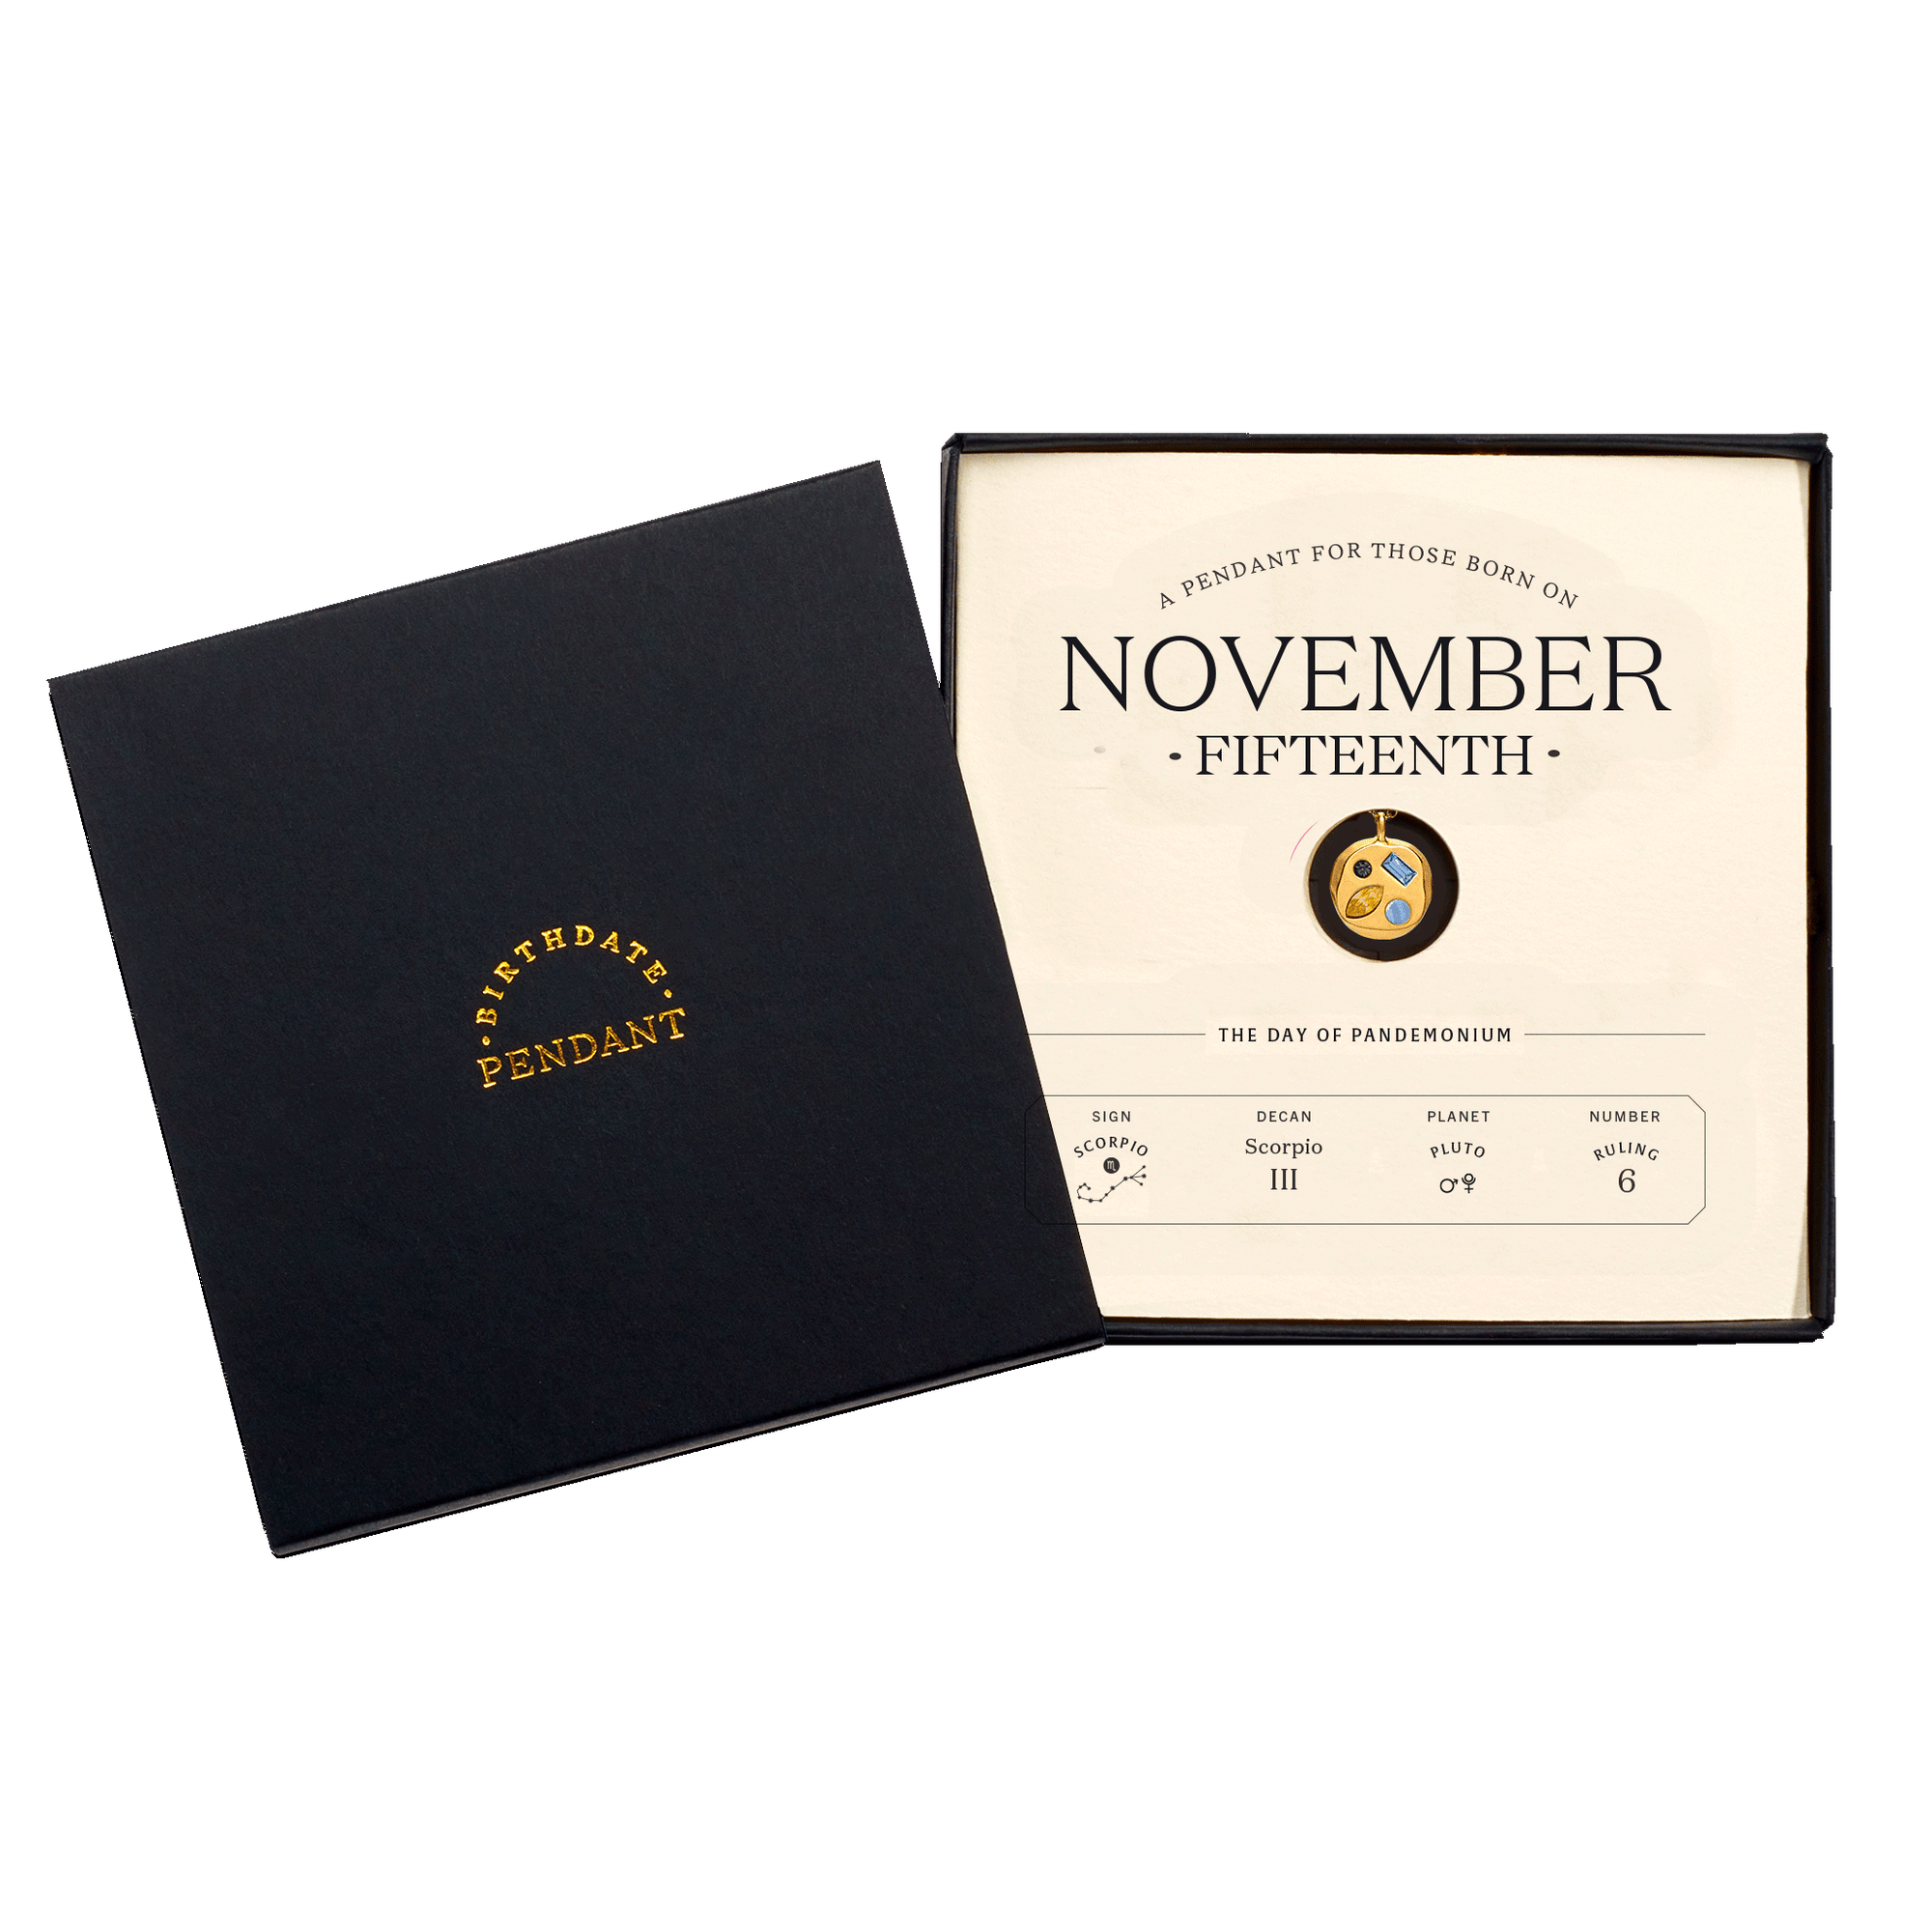 The November Fifteenth Pendant inside its box